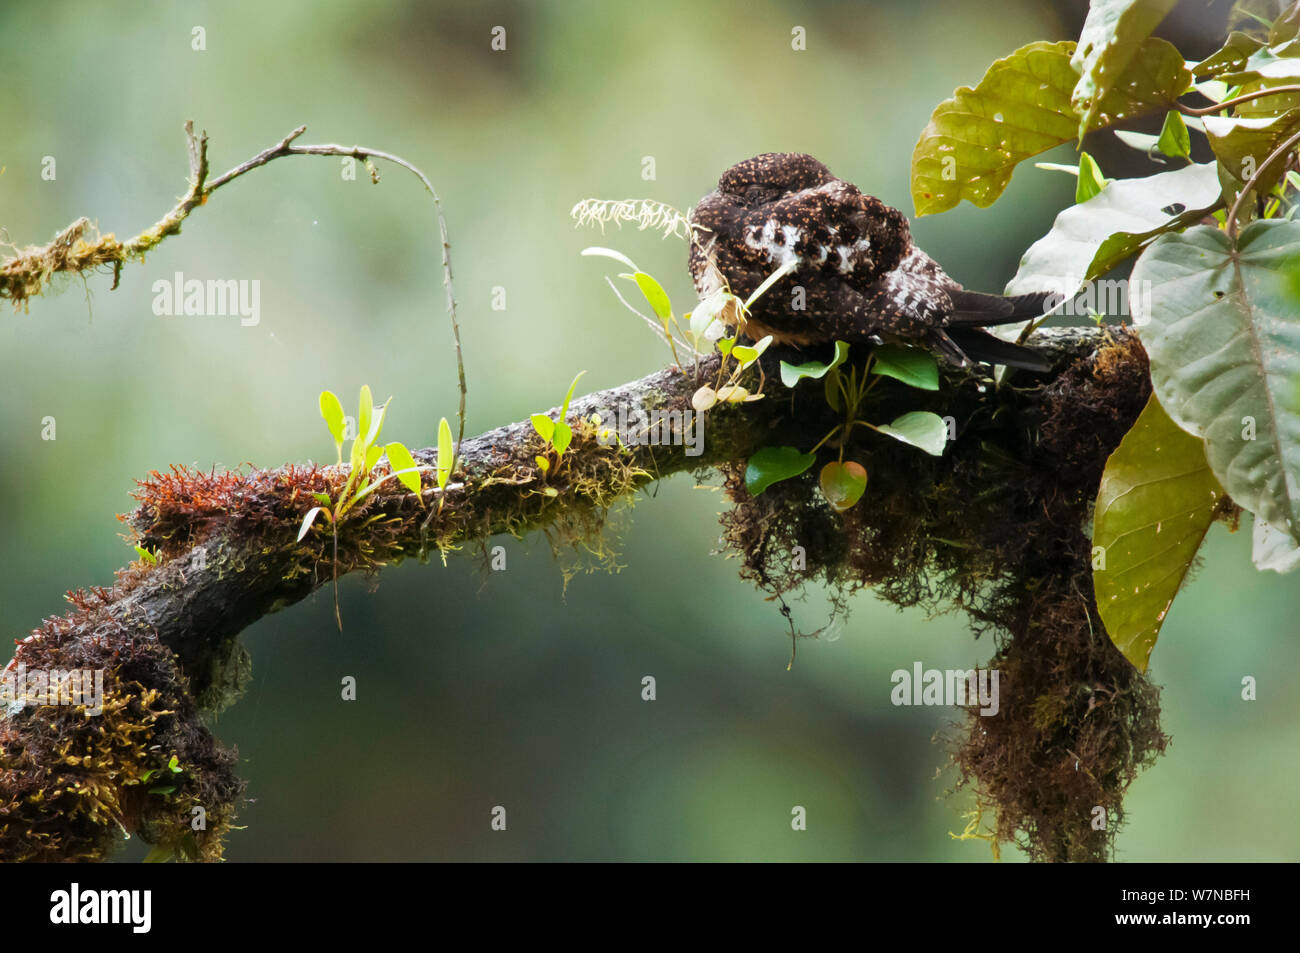 Rufous bauchige nightjar (Lurocalis rufiventris) Angel Paz finden, Mindo region, andinen Nebelwald, Westhang, tropischen Anden, Ecuador Stockfoto